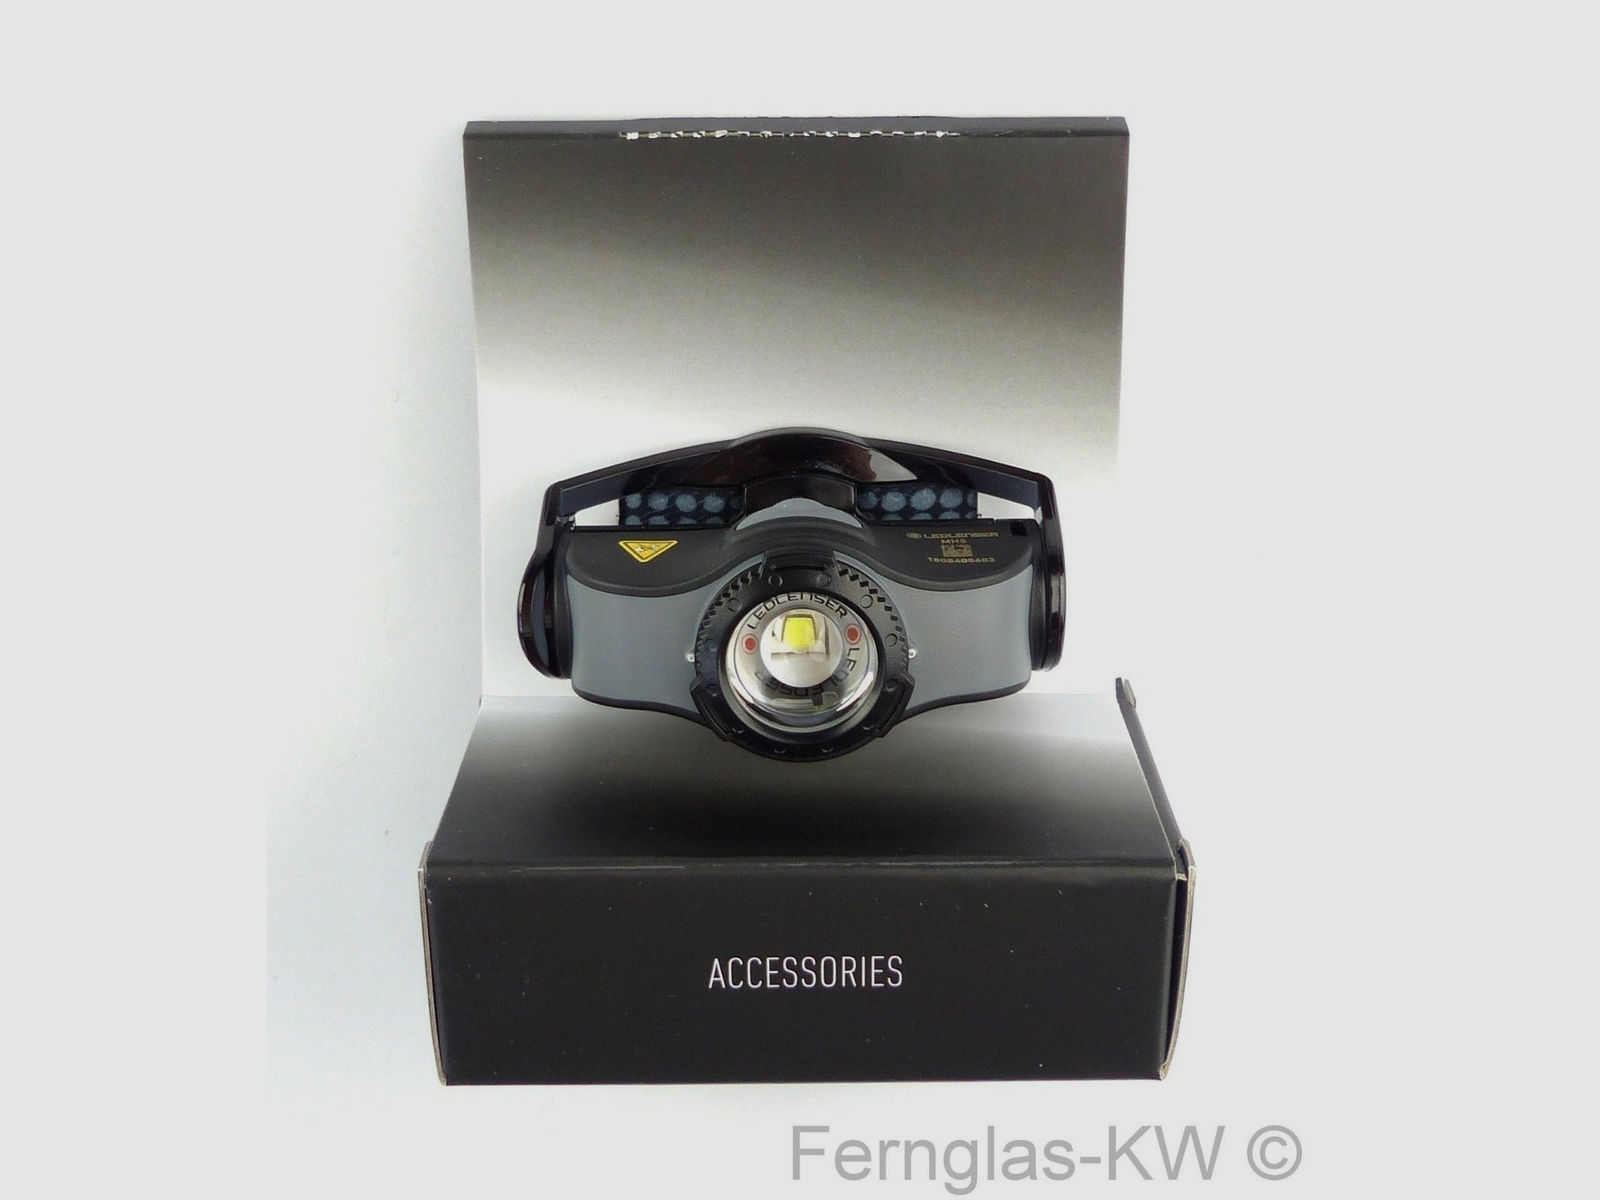 Ledlenser 501598 LED Kopflampe Stirnlampe MH5 Grau Schwarz 400 Lumen mit Akku